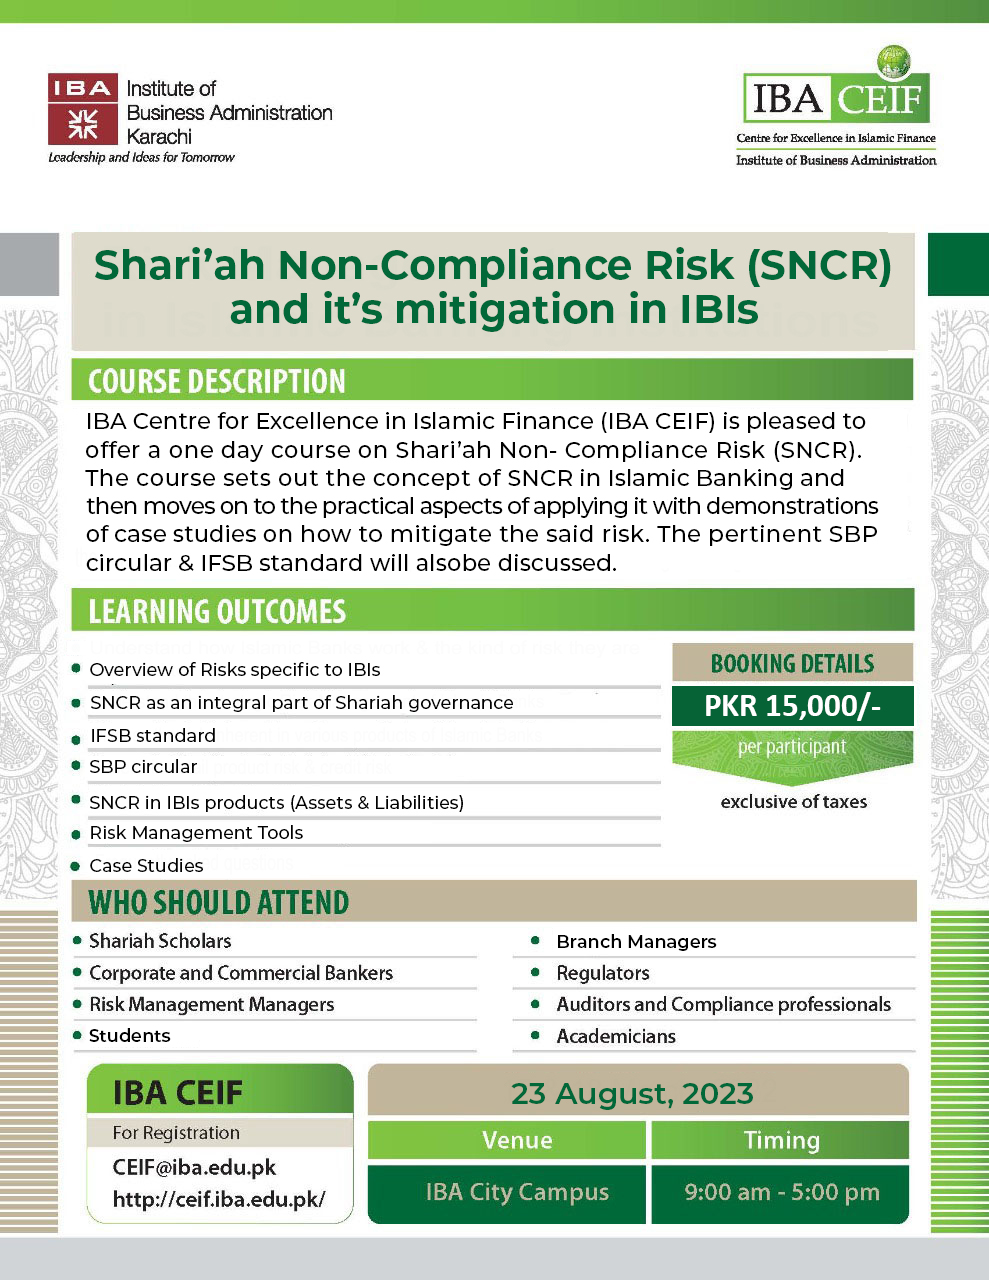 Shari'ah Non-Compliance Risk (SNCR) & it's mitigation in IBIs